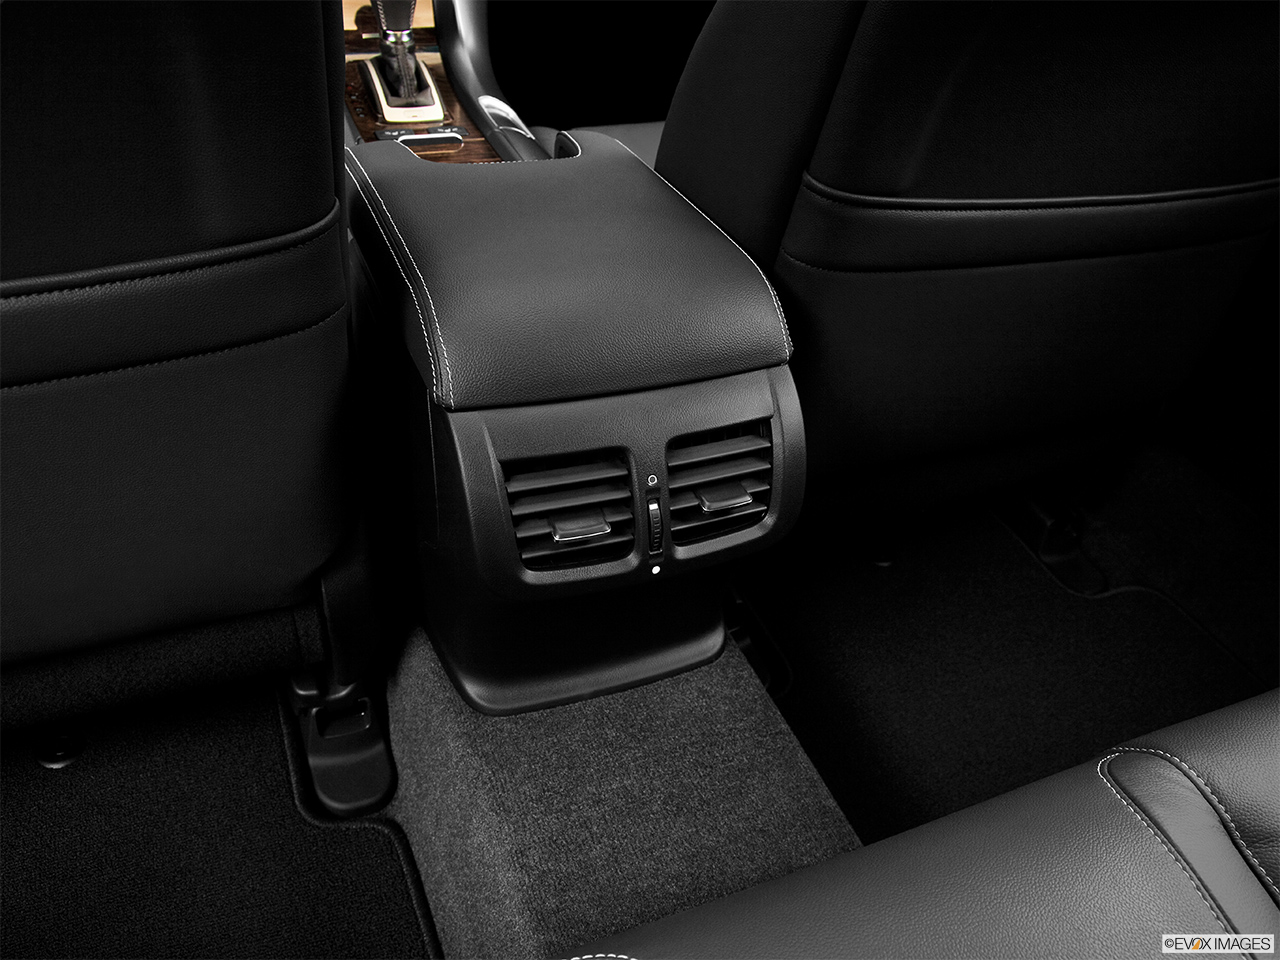 2014 Acura TL Special Edition Rear A/C controls. 